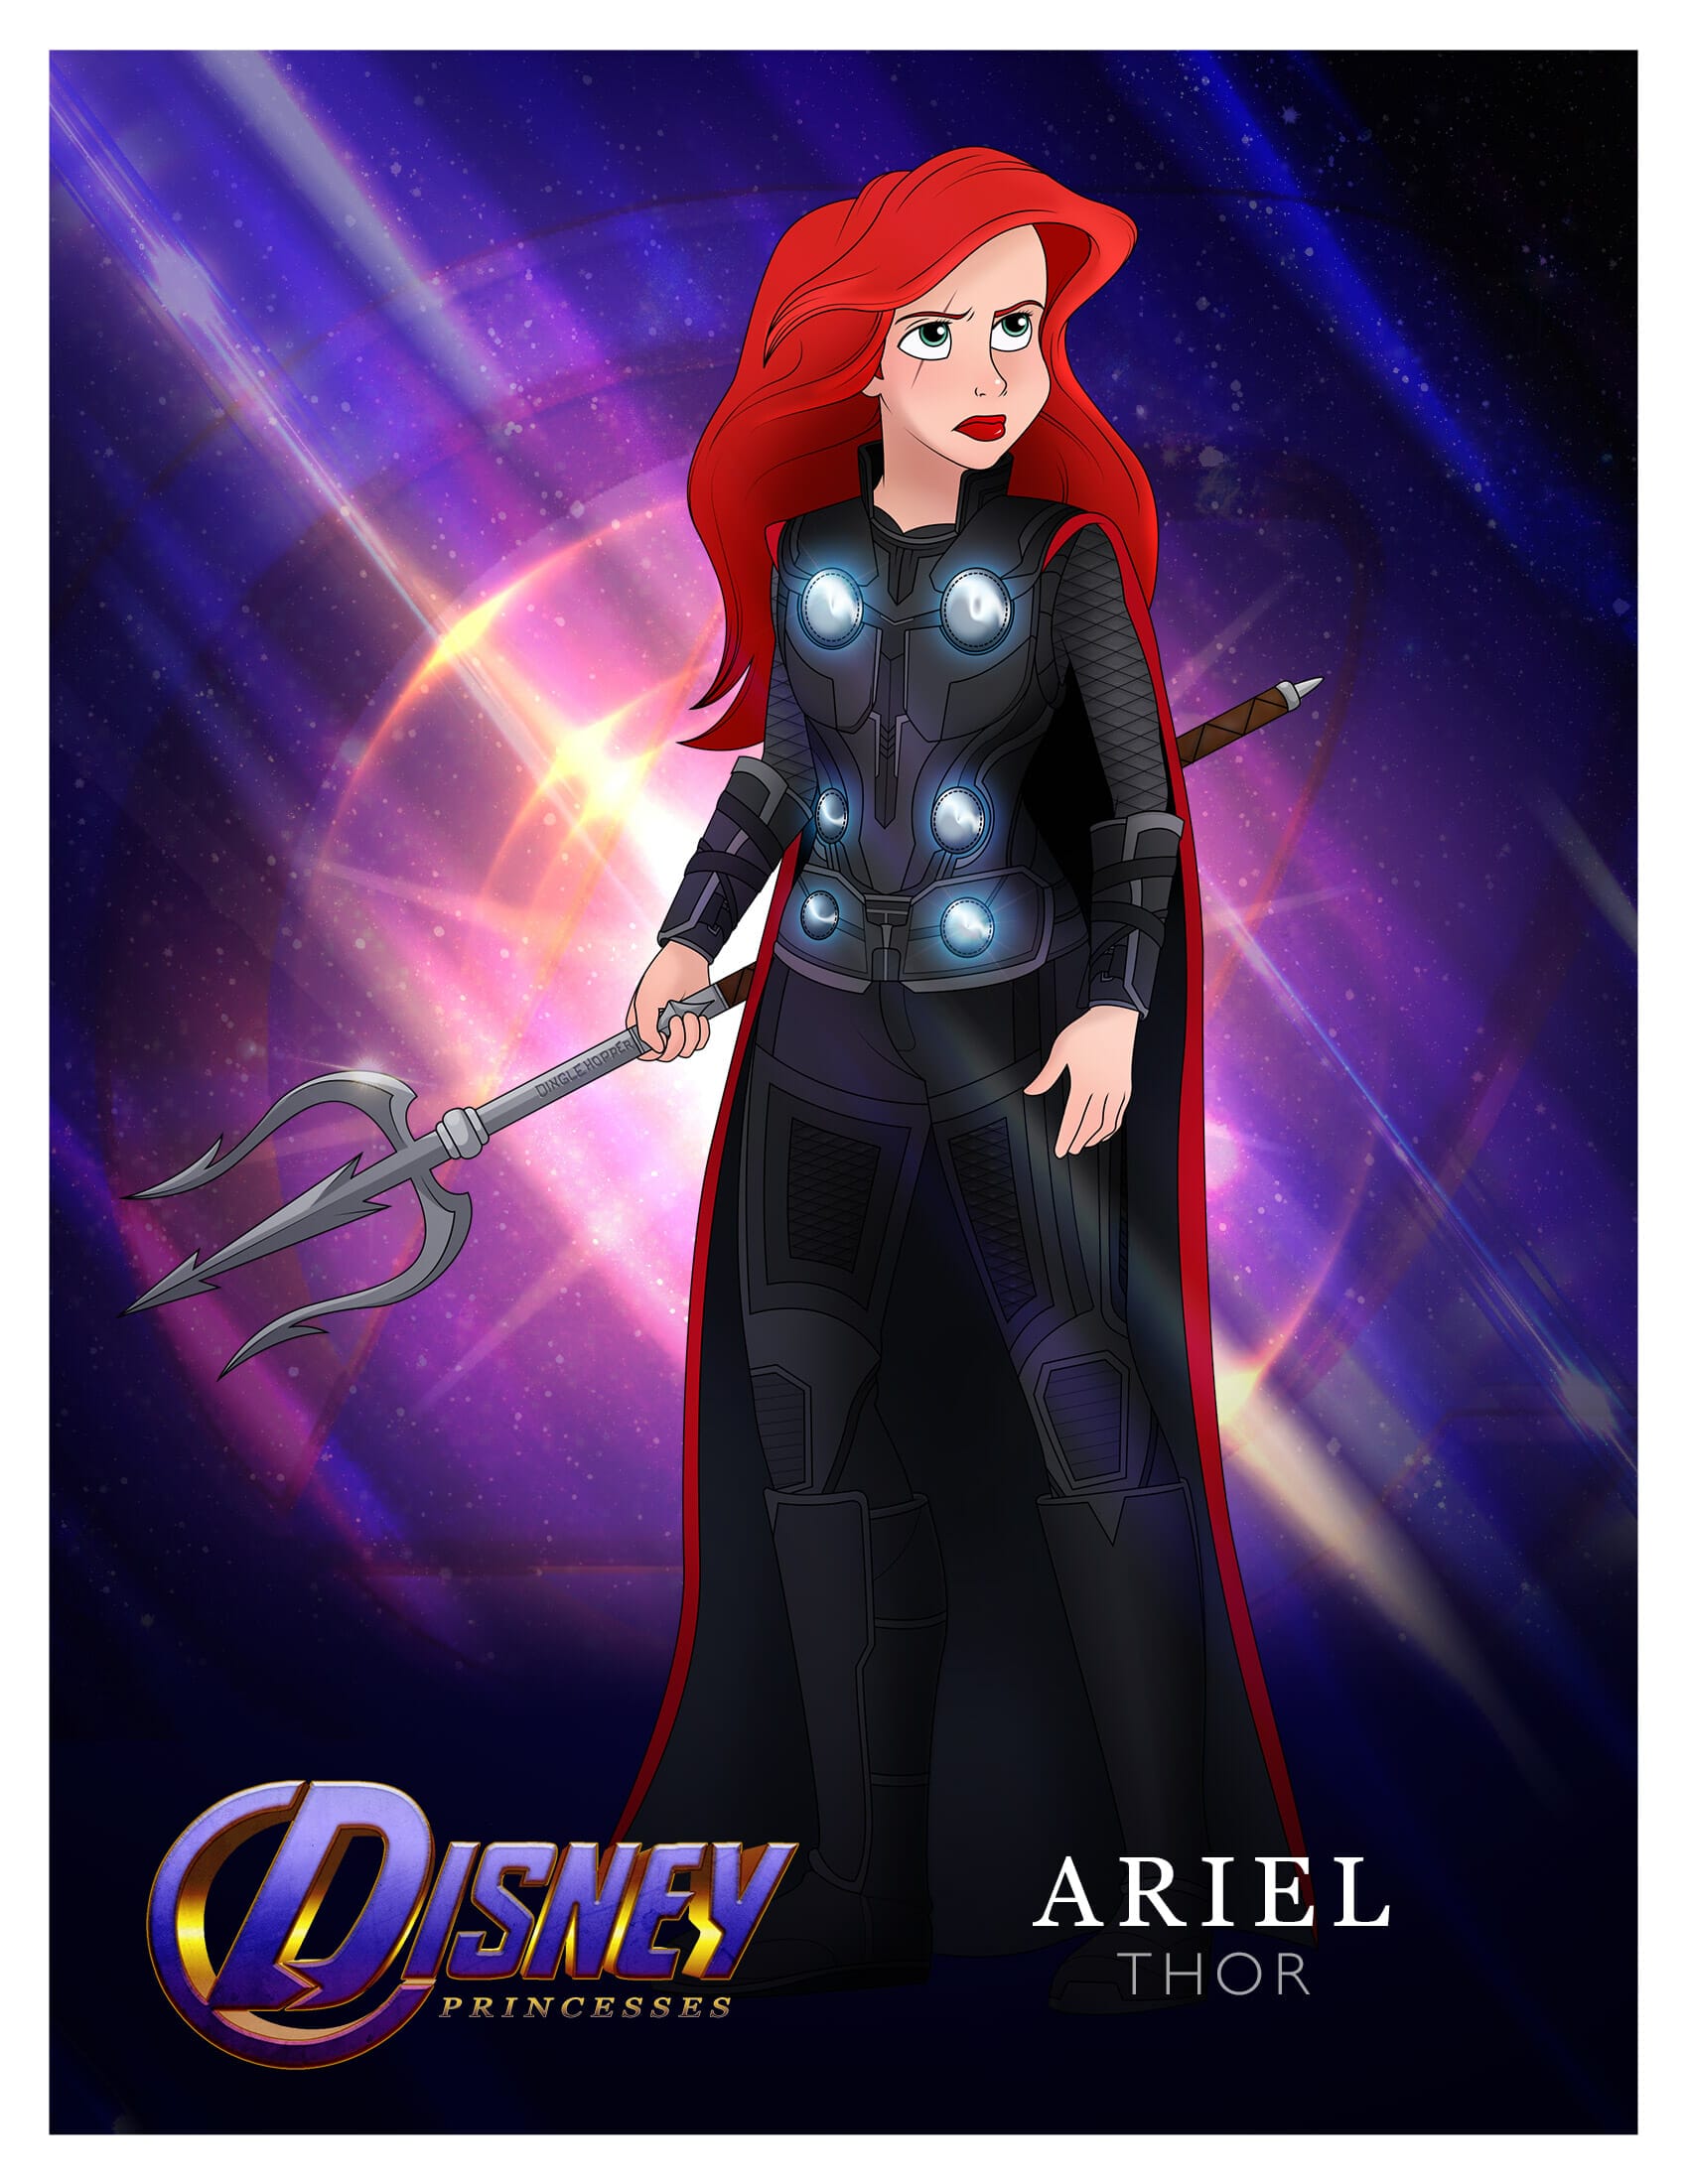 Princess Ariel as Thor